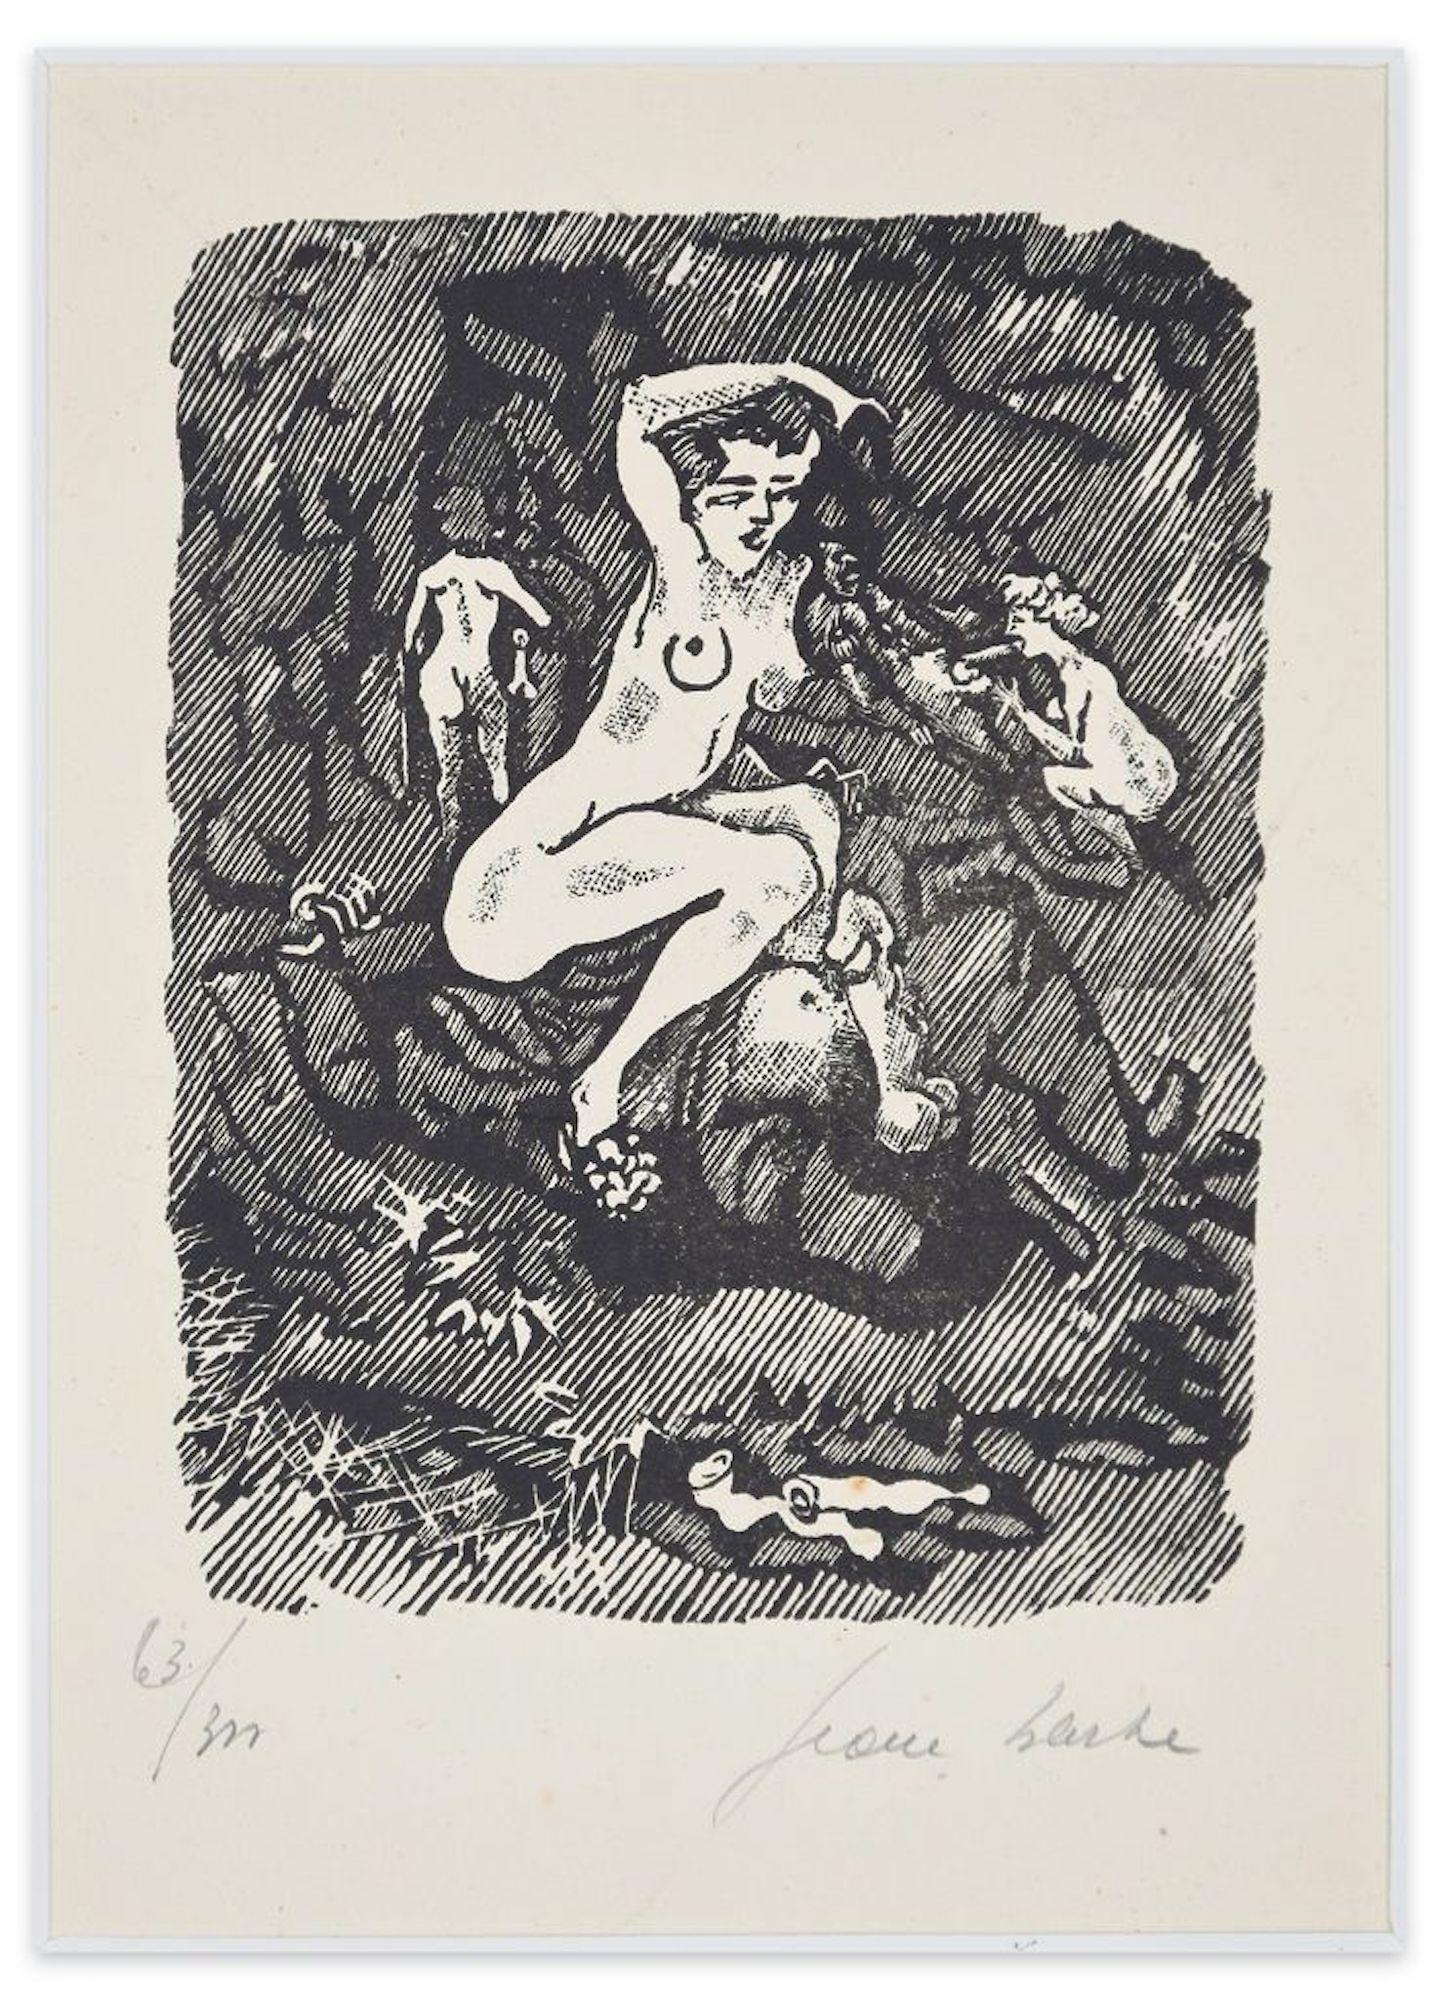 Boudoir - Linocut on Paper by Jean Barbe / Mino Maccari - 1945